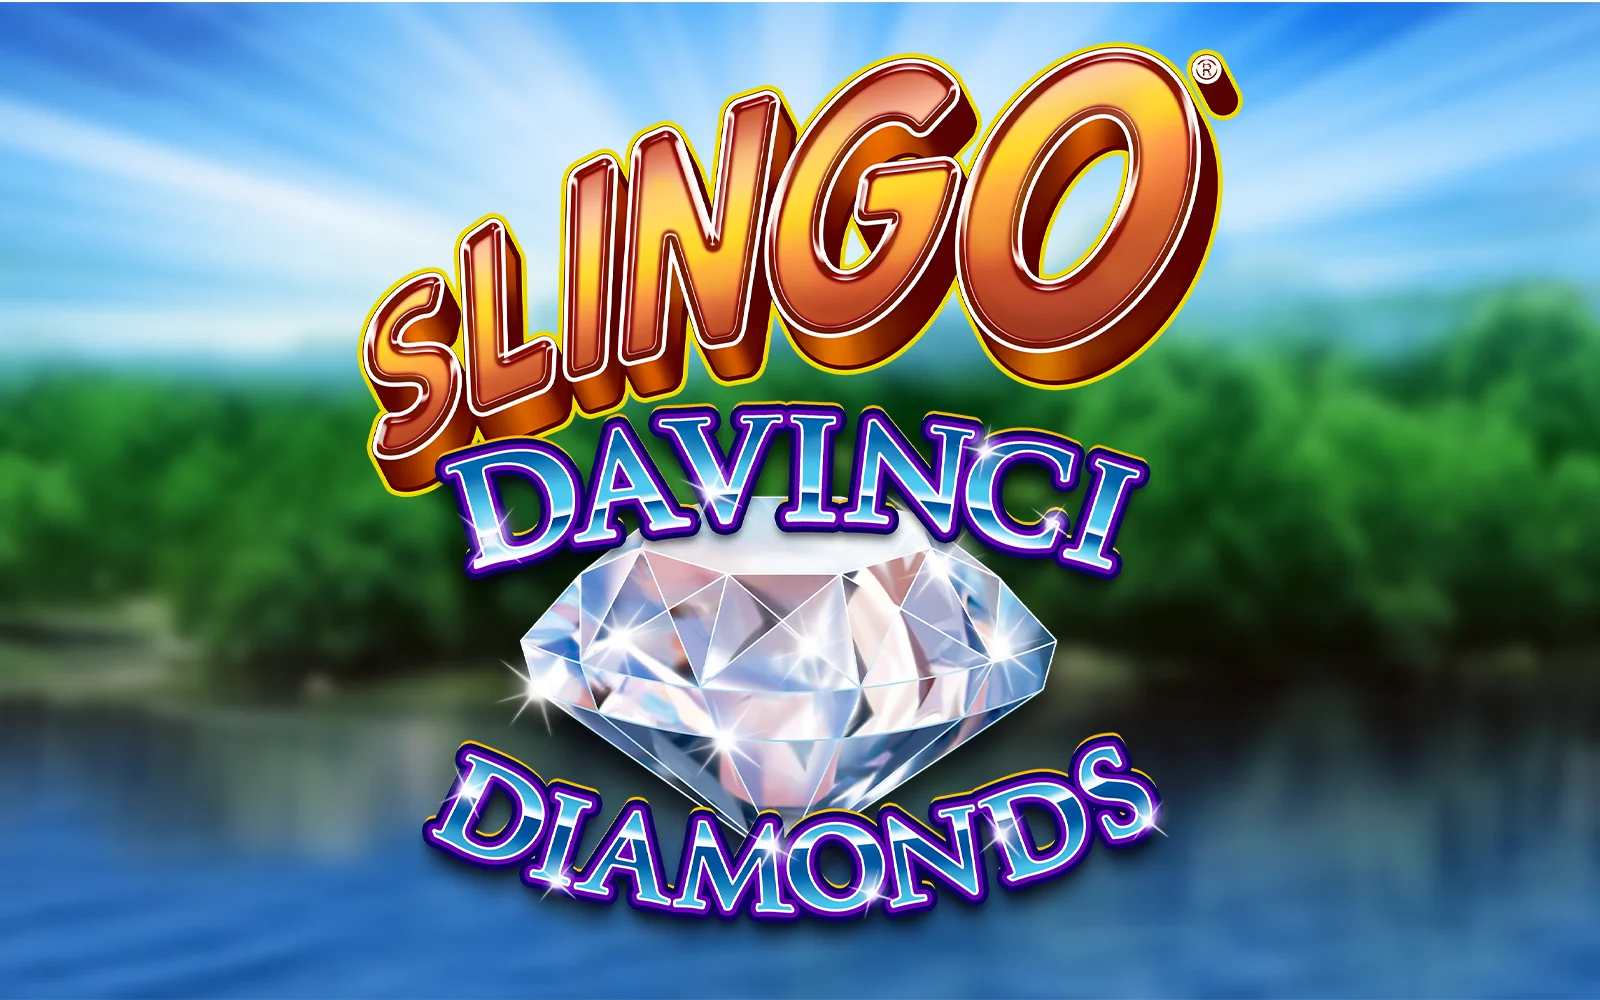 Gioca a Slingo Da Vinci Diamonds sul casino online Starcasino.be